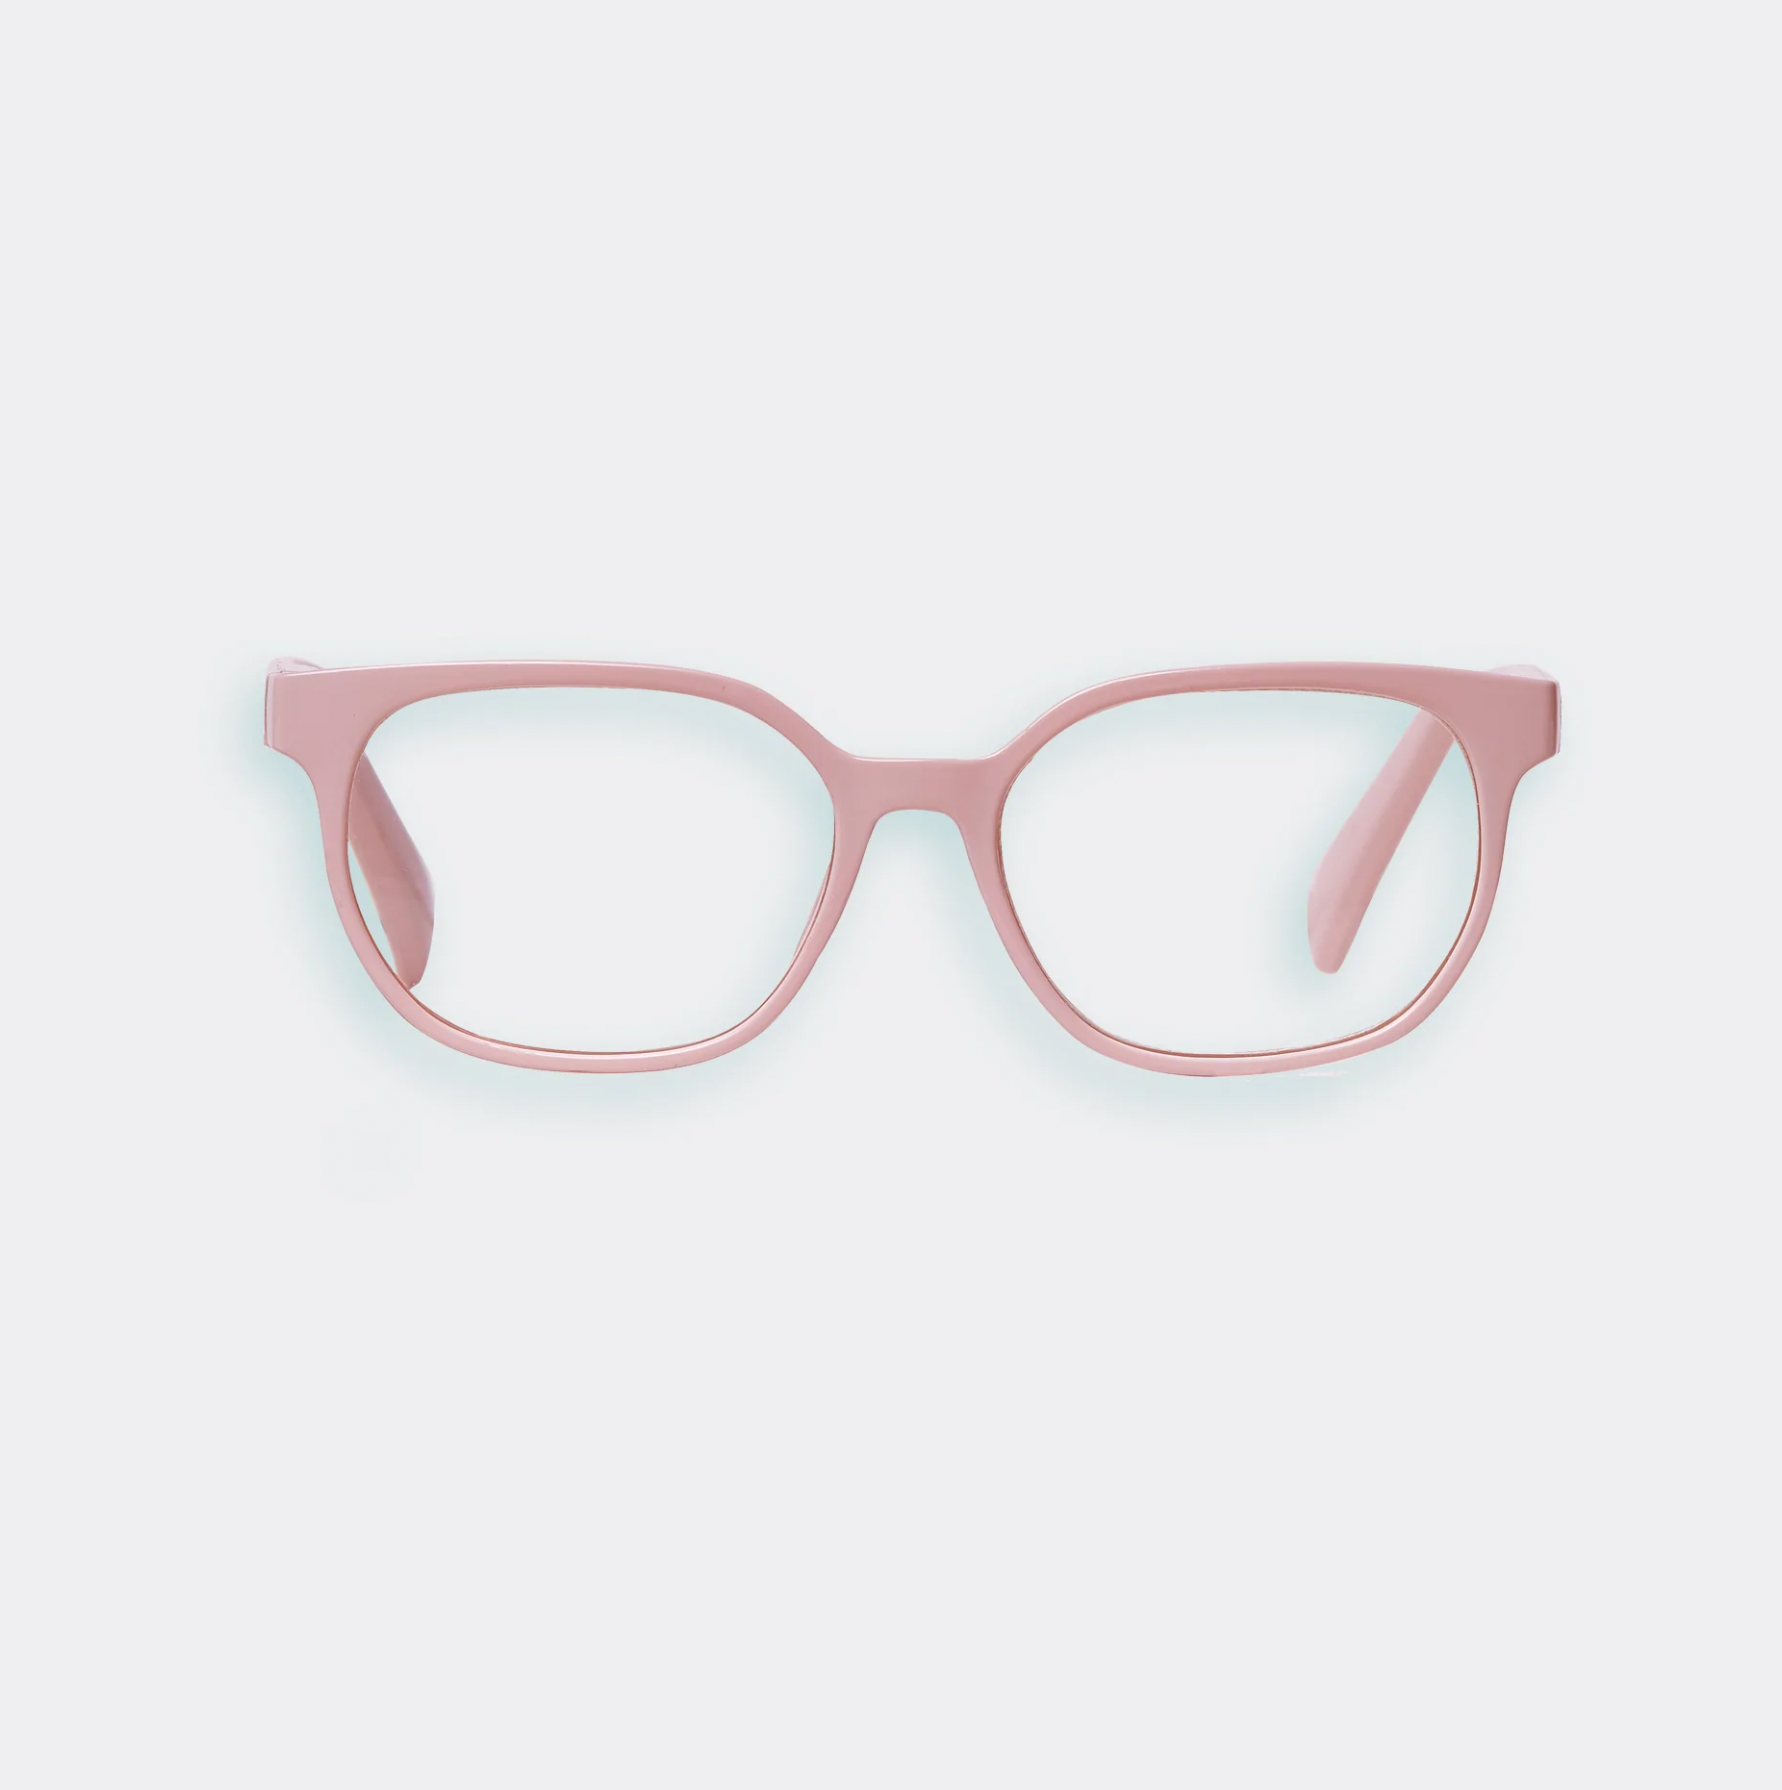 Pink magnifying glasses 1.5 x magnification - eyelash magnifying glasses - Lash Box LA Australia  - 